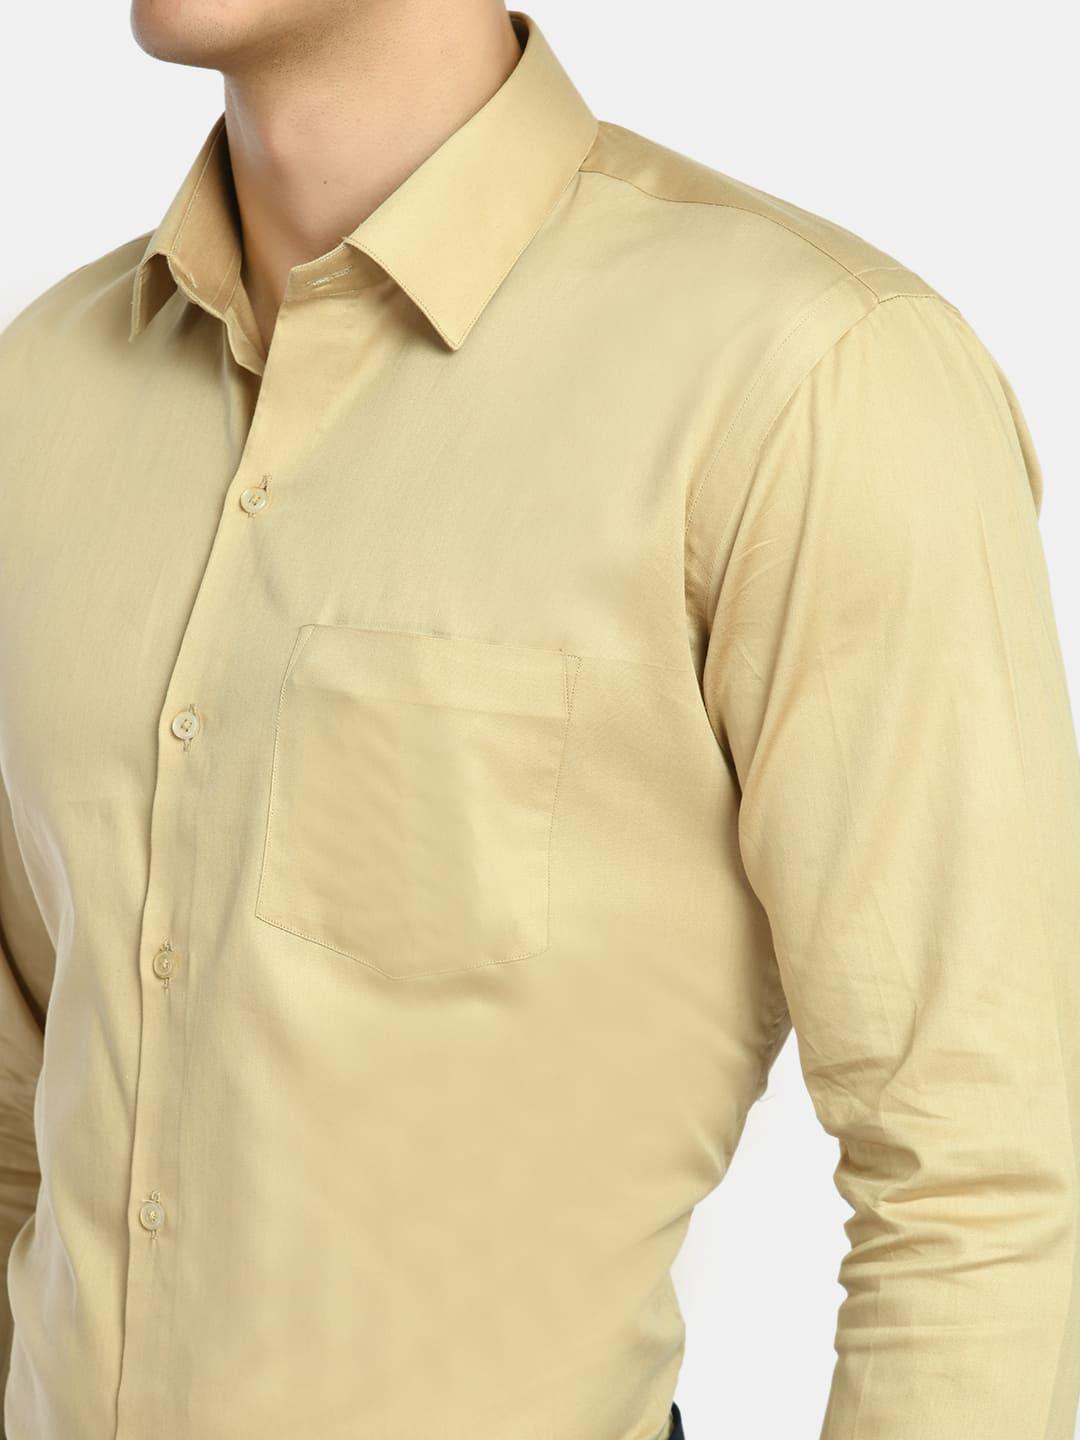 Men's Fawn Spread Collar Solid Formal Shirt